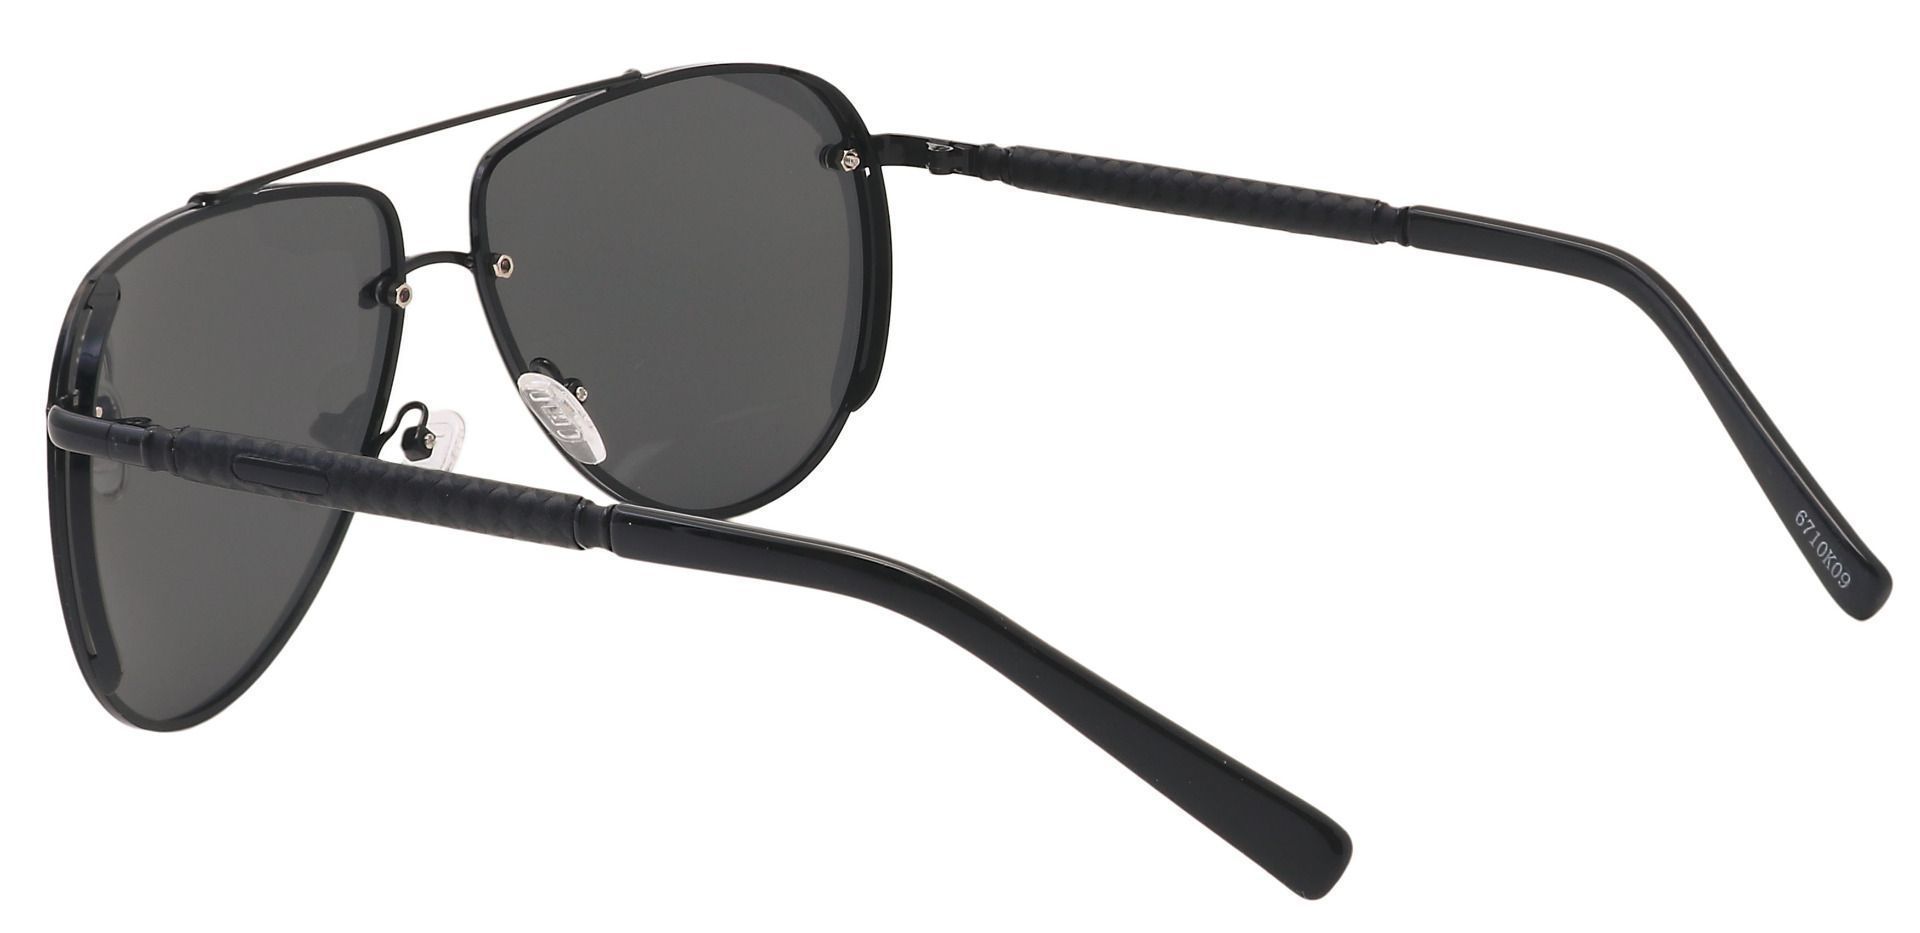 Artie Aviator Non-Rx Sunglasses - Black Frame With Gray Lenses